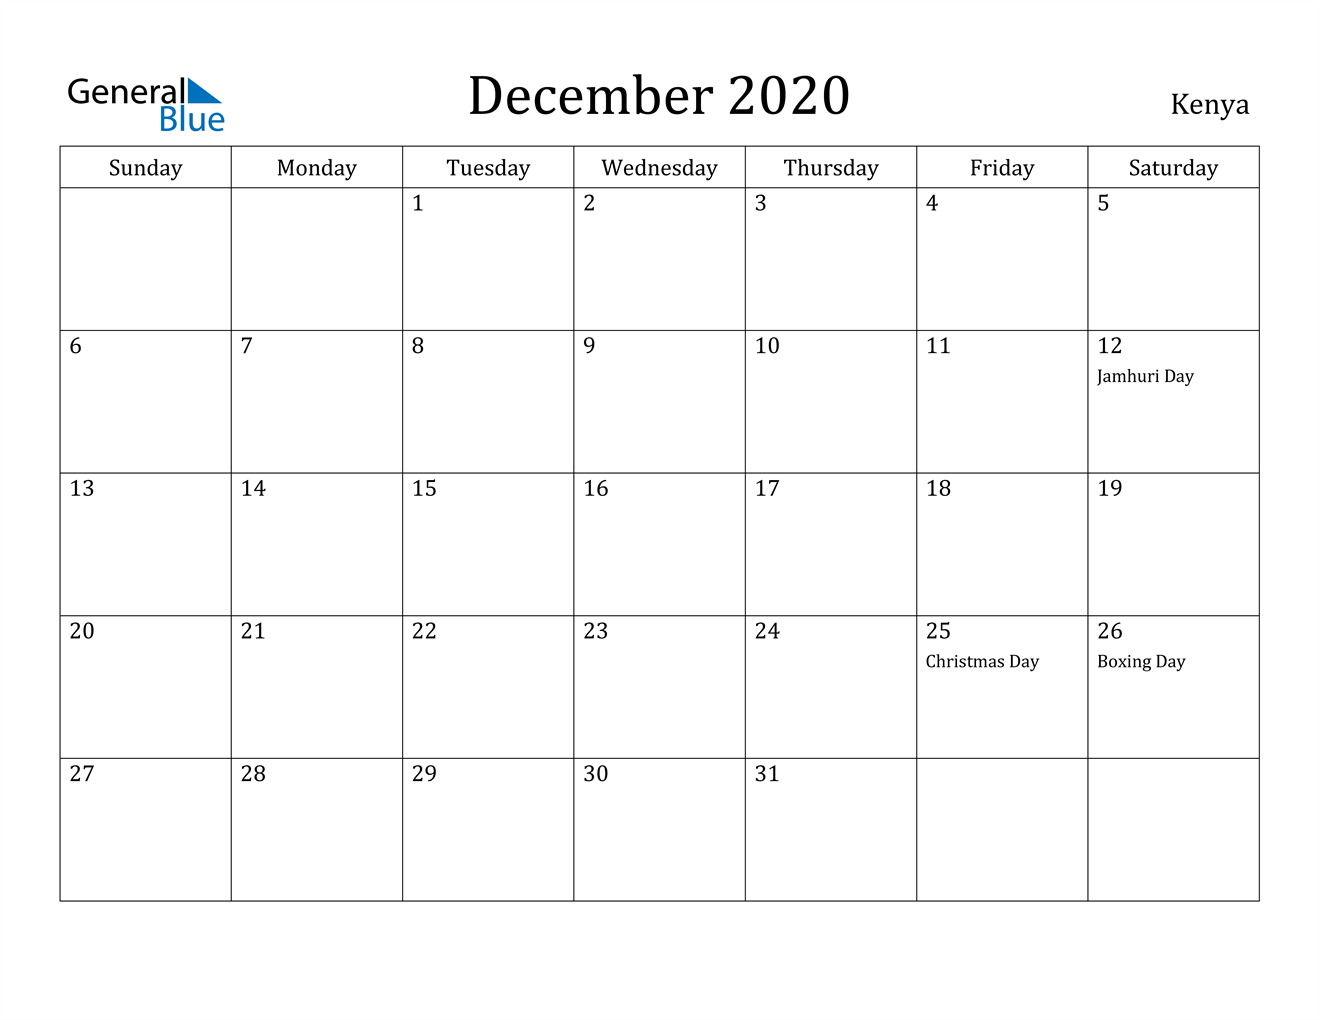 December 2020 Calendar - Kenya